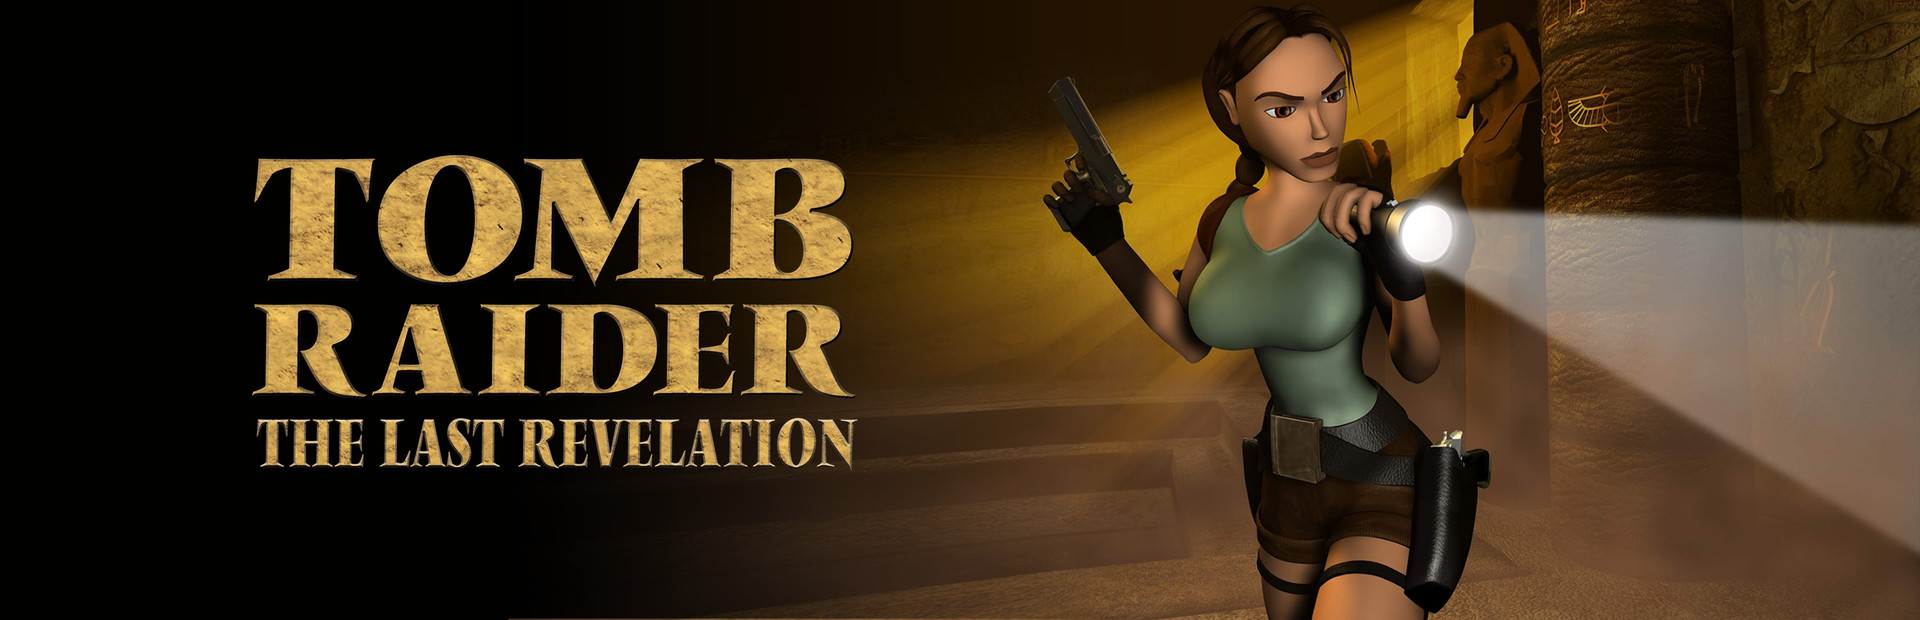 Tomb Raider IV: The Last Revelation cover image